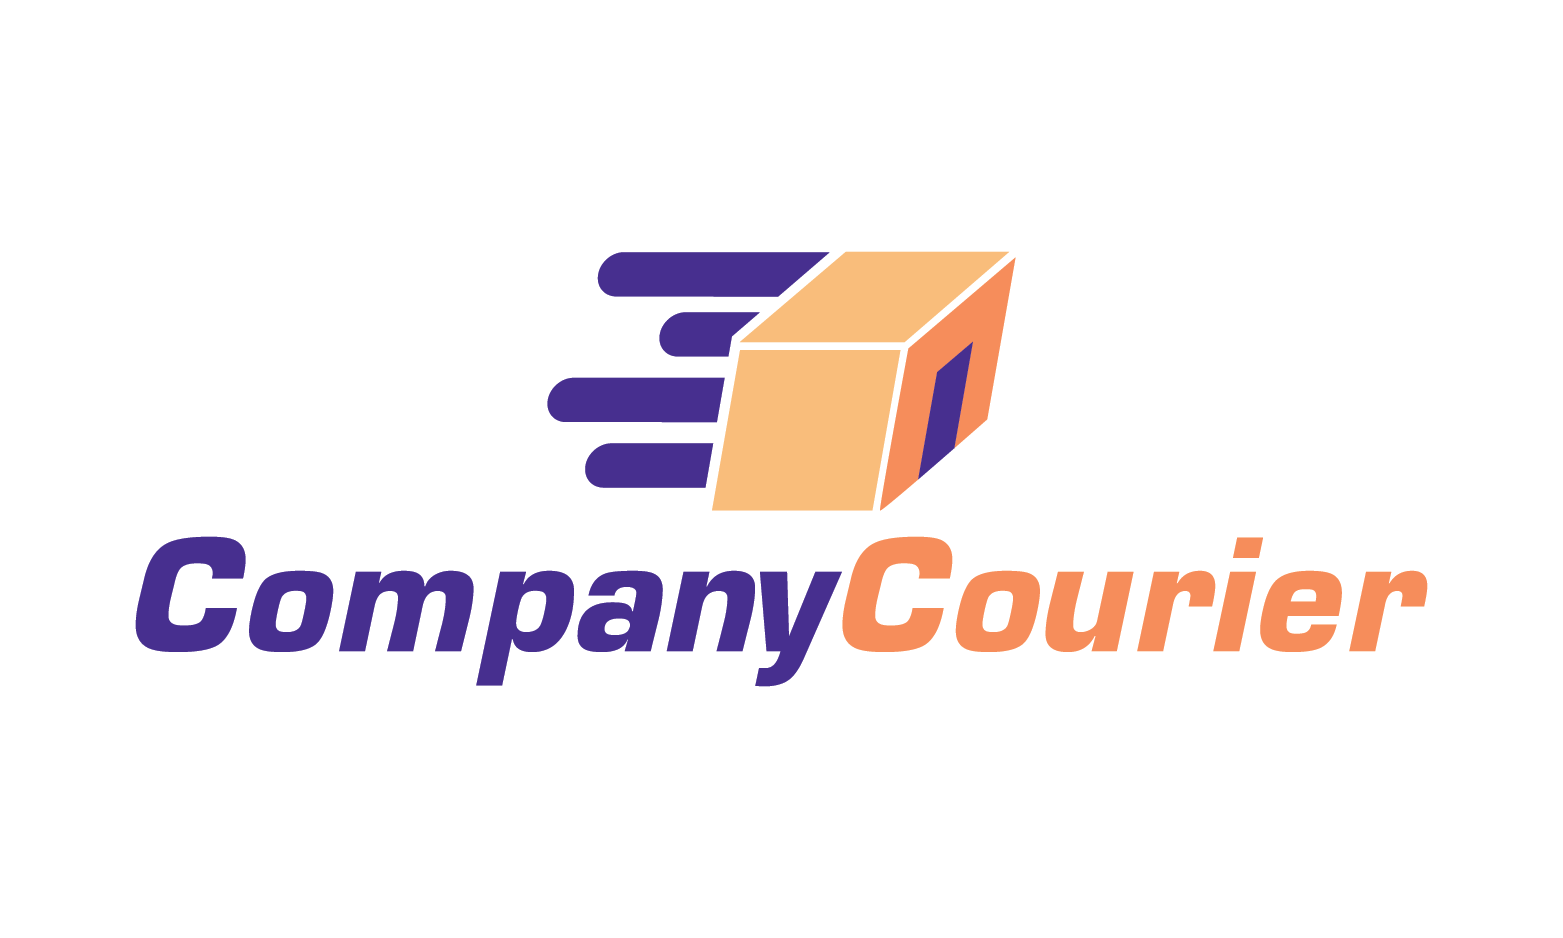 CompanyCourier.com - Creative brandable domain for sale